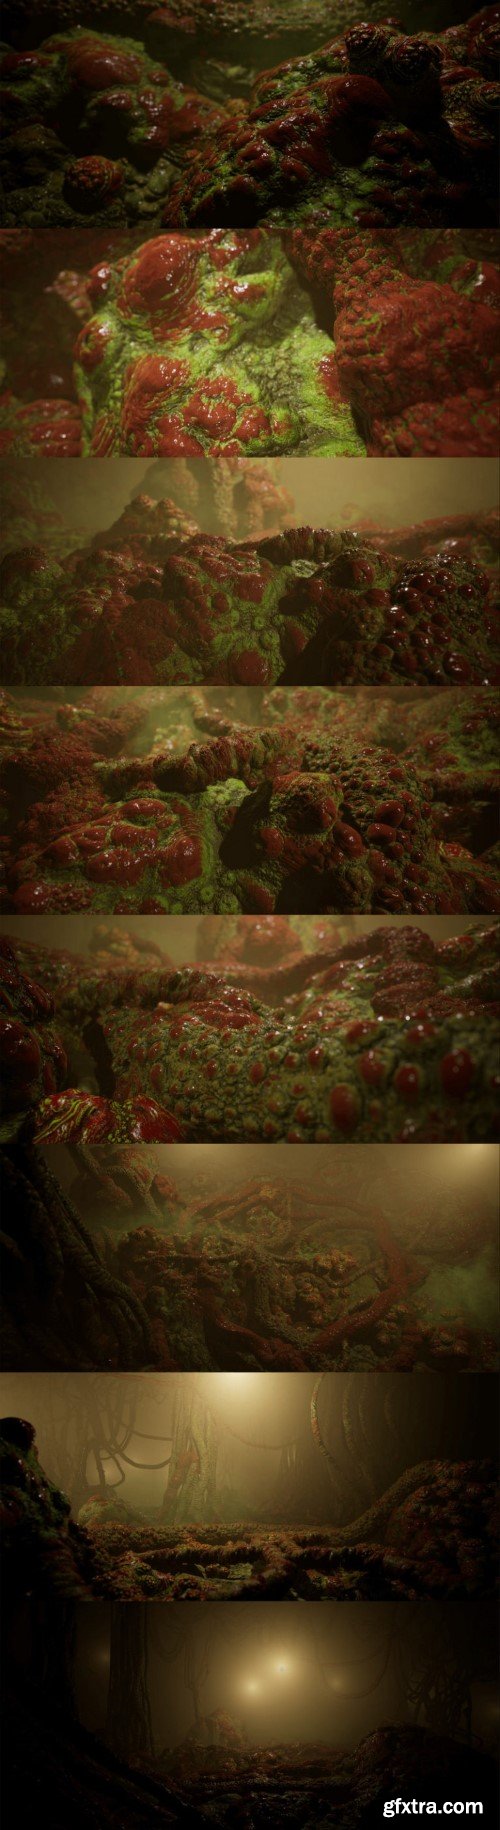 Unreal Engine - Alien Culture